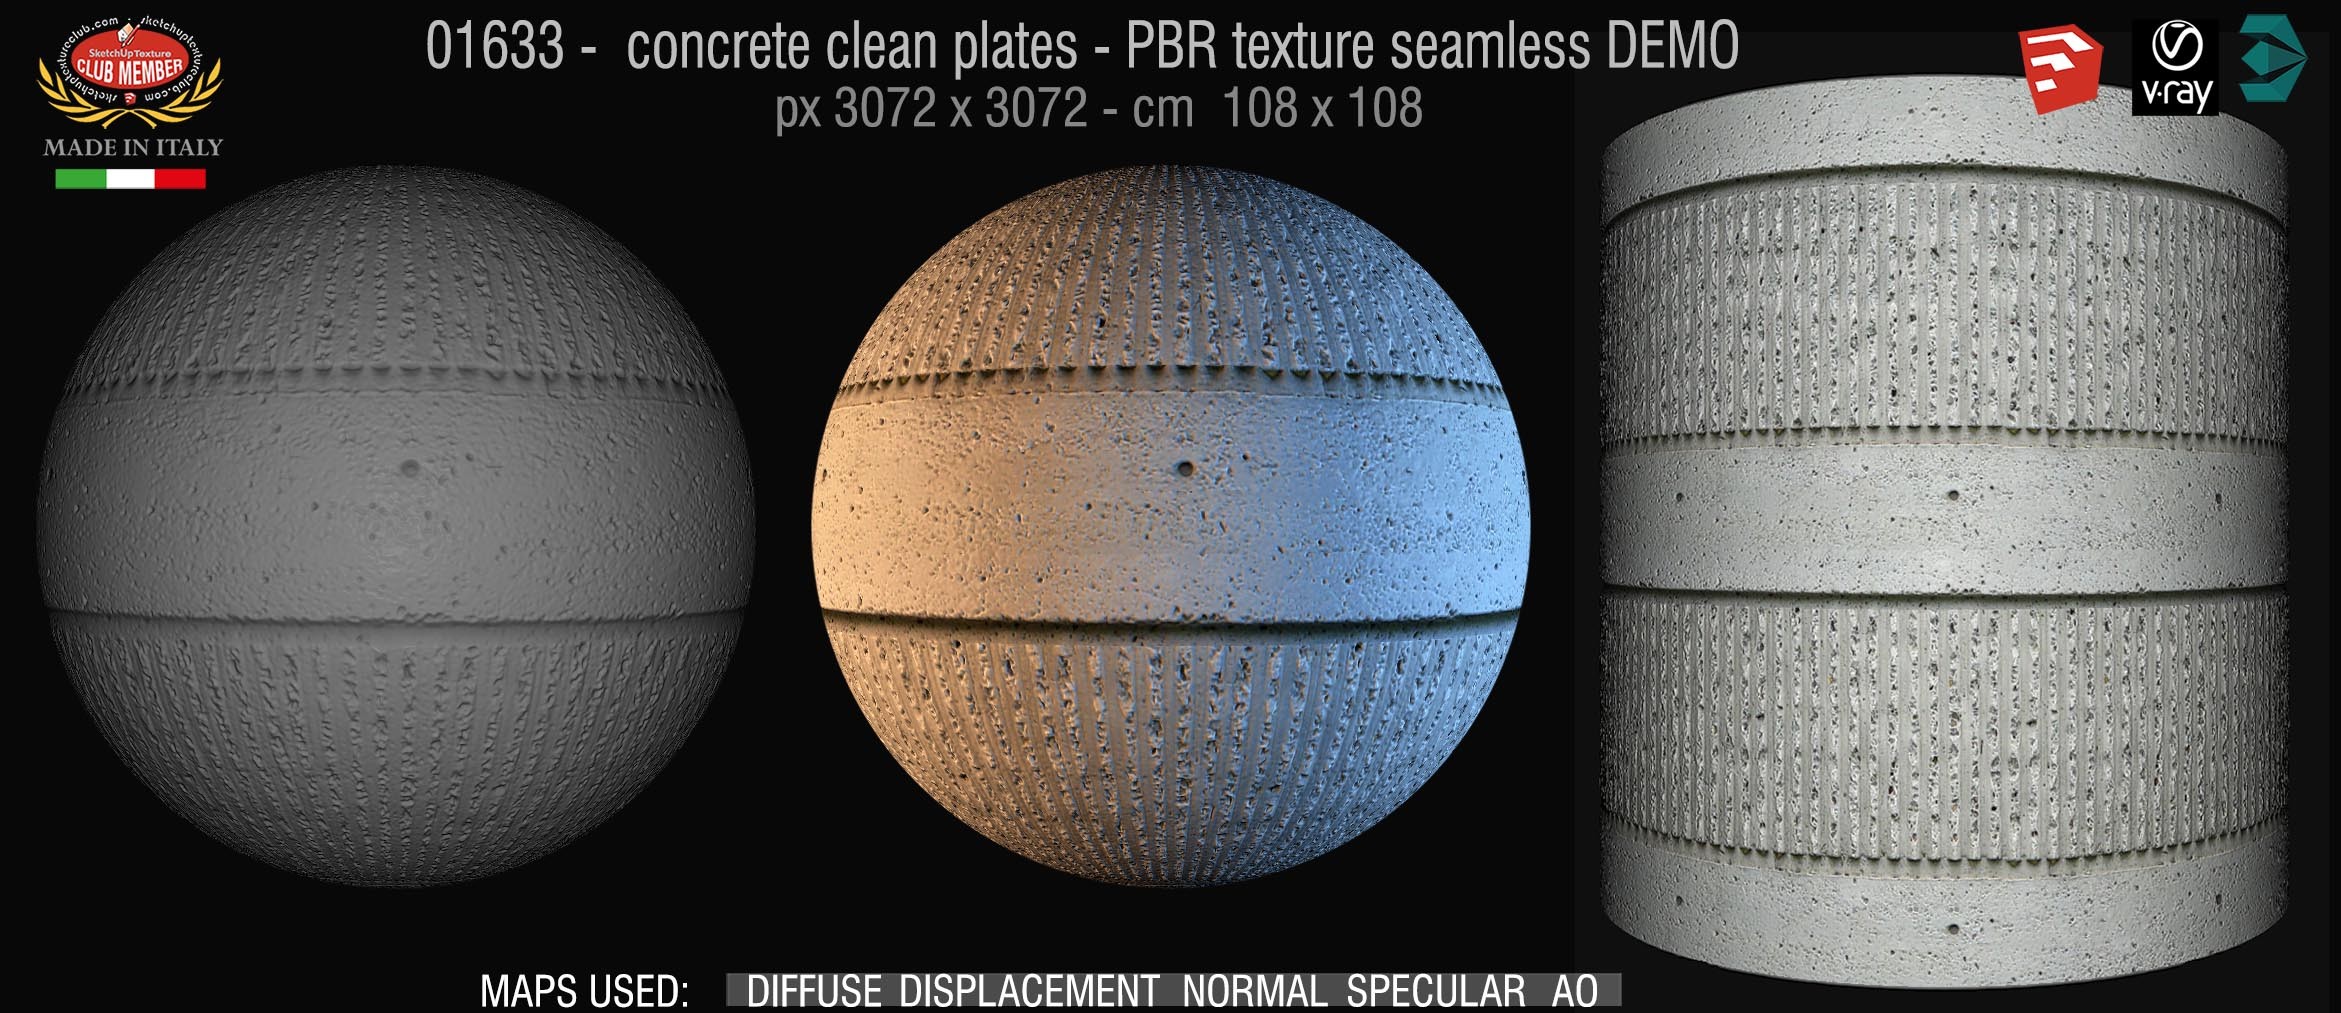 01633 concrete clean plates wall PBR texture seamless DEMO